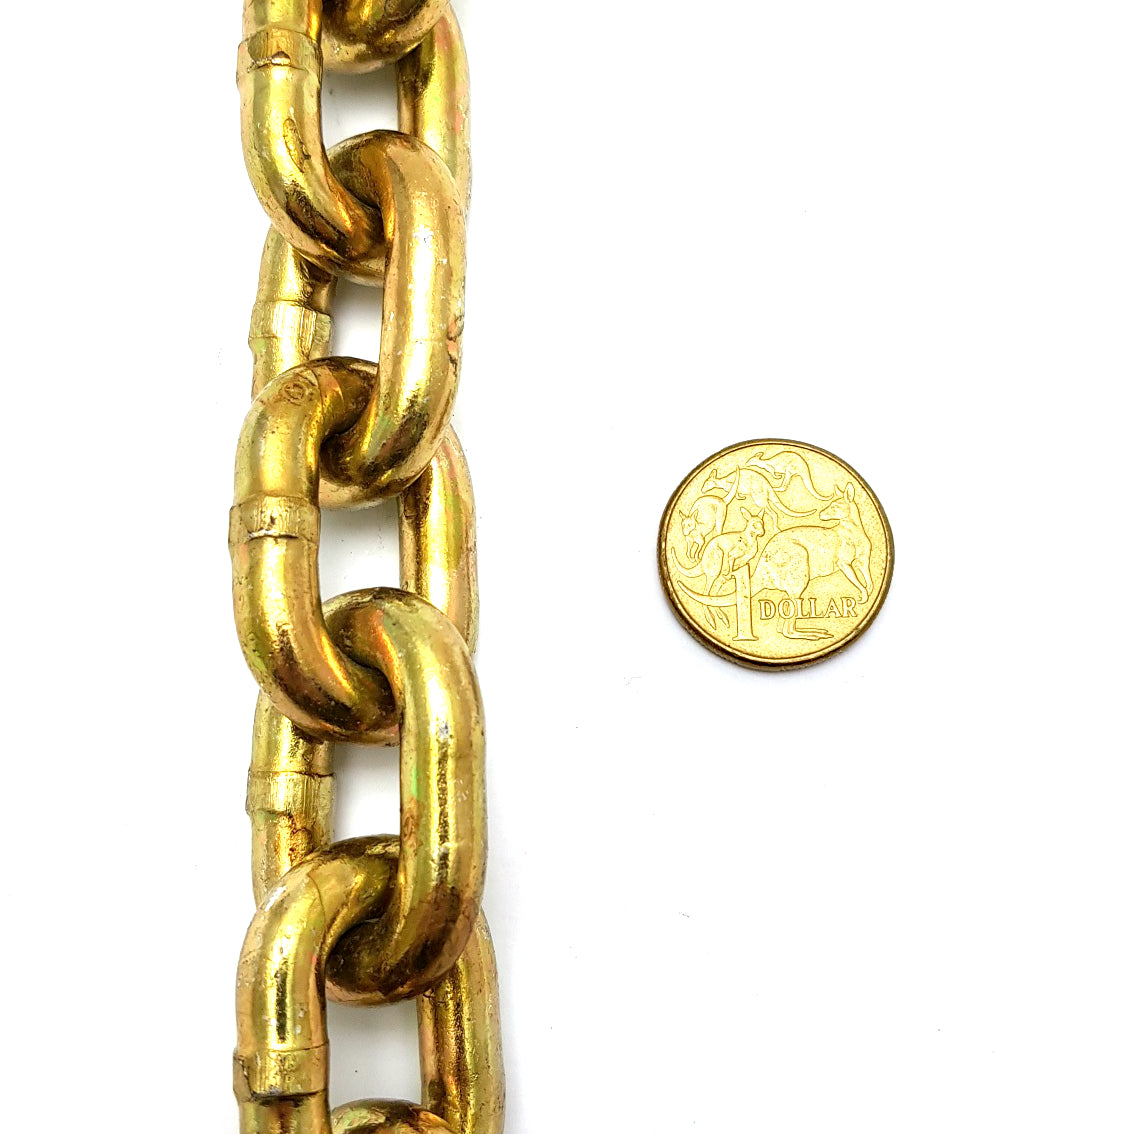 Security Chain, size 8mm, qty 1m. Melbourne, Australia.